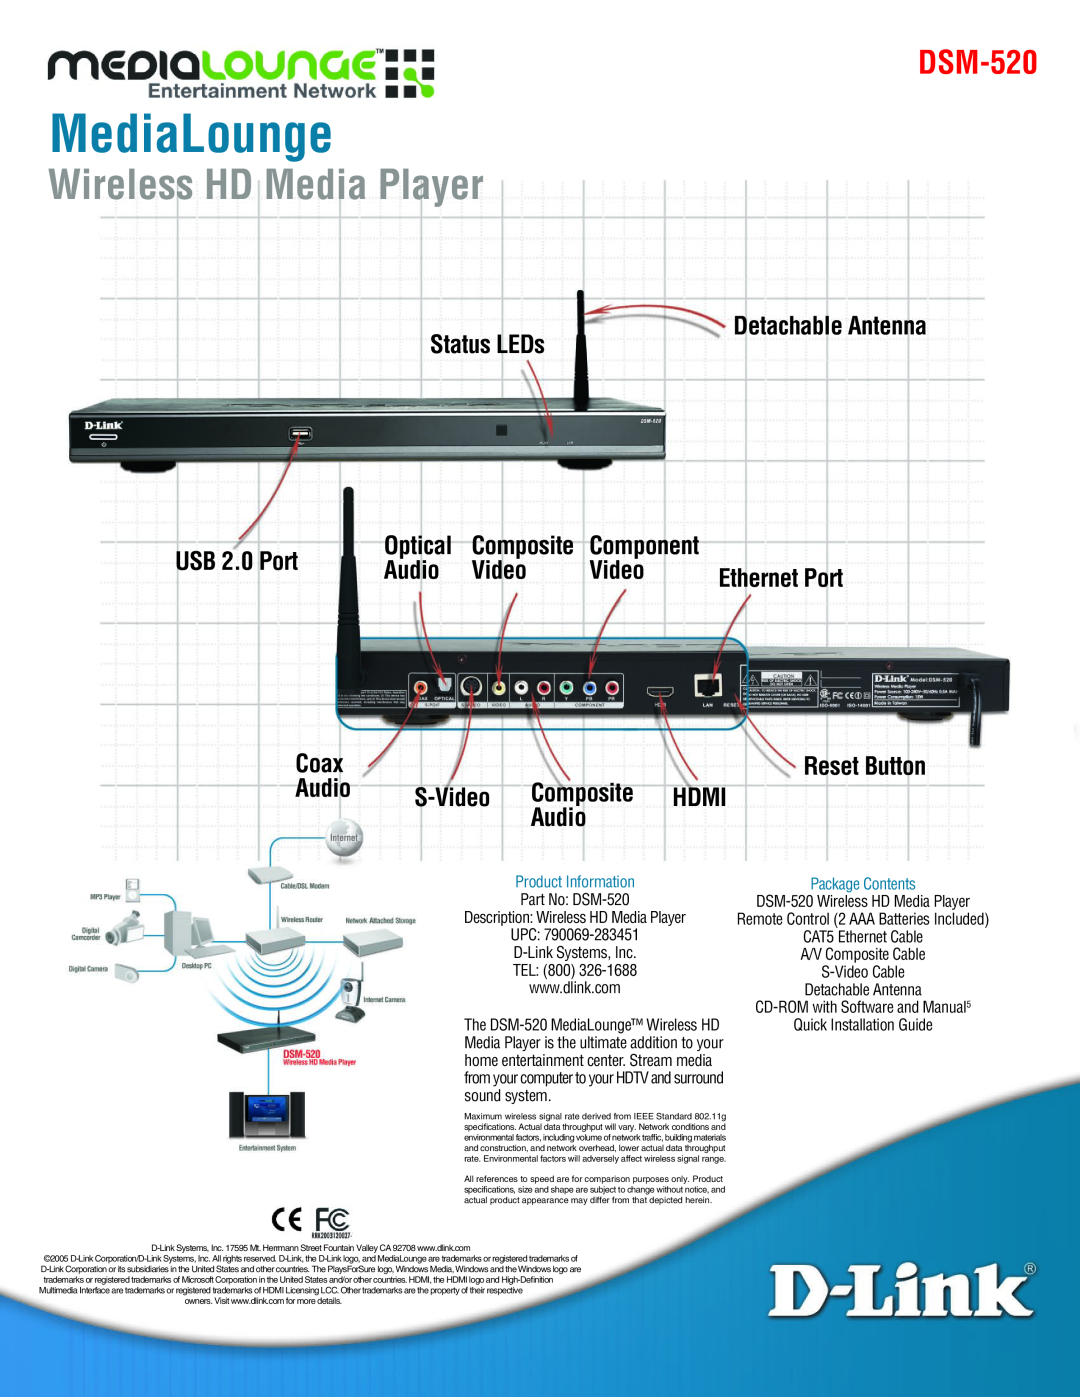 D-Link DSM-520 MediaLounge, Wireless HD Media Player, Status LEDs, Detachable Antenna, USB 2.0 Port, Optical, Audio, Video 